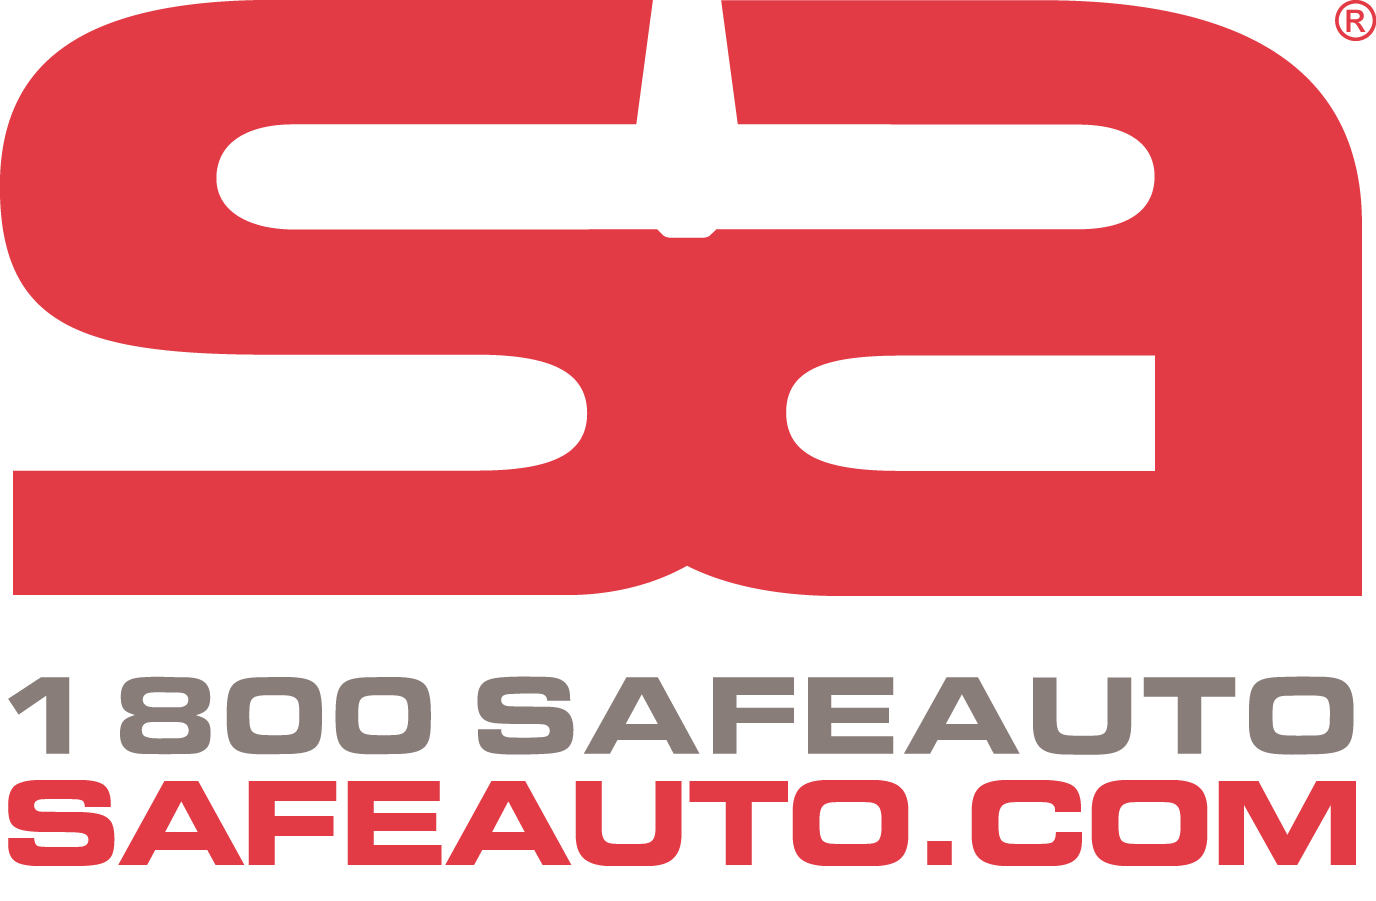 The SafeAuto Logo